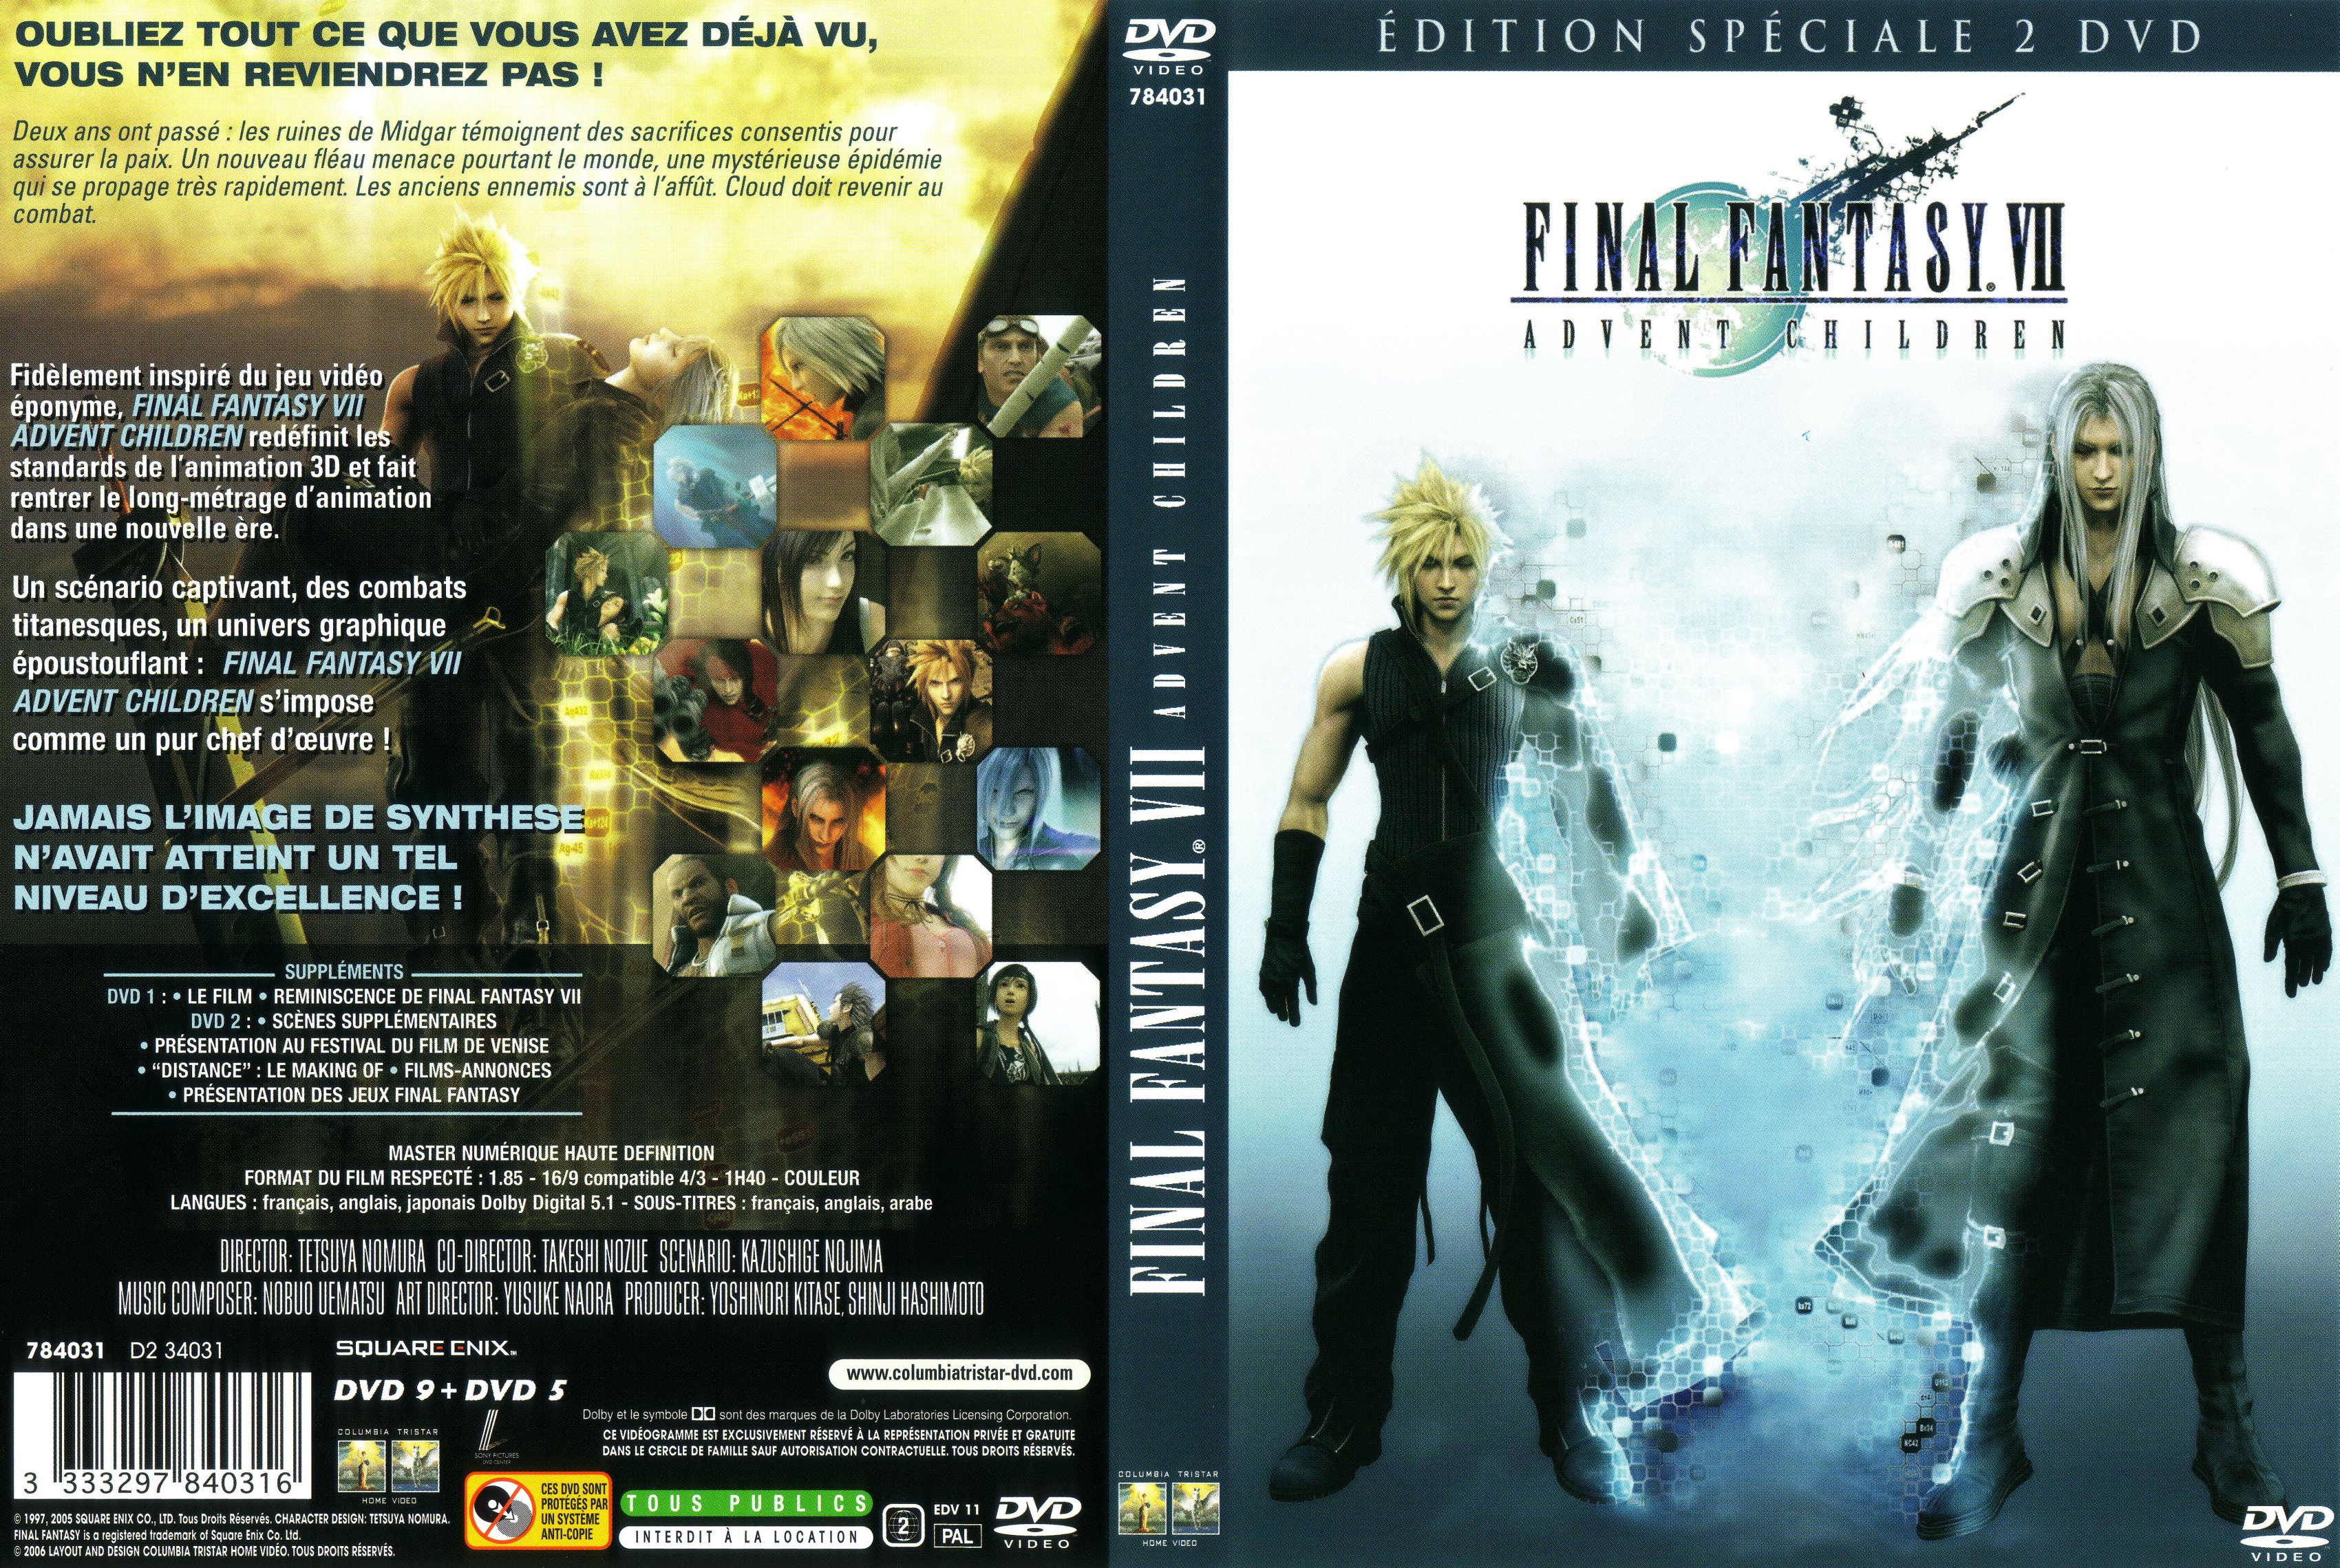 Jaquette DVD Final Fantasy VII Advent Children